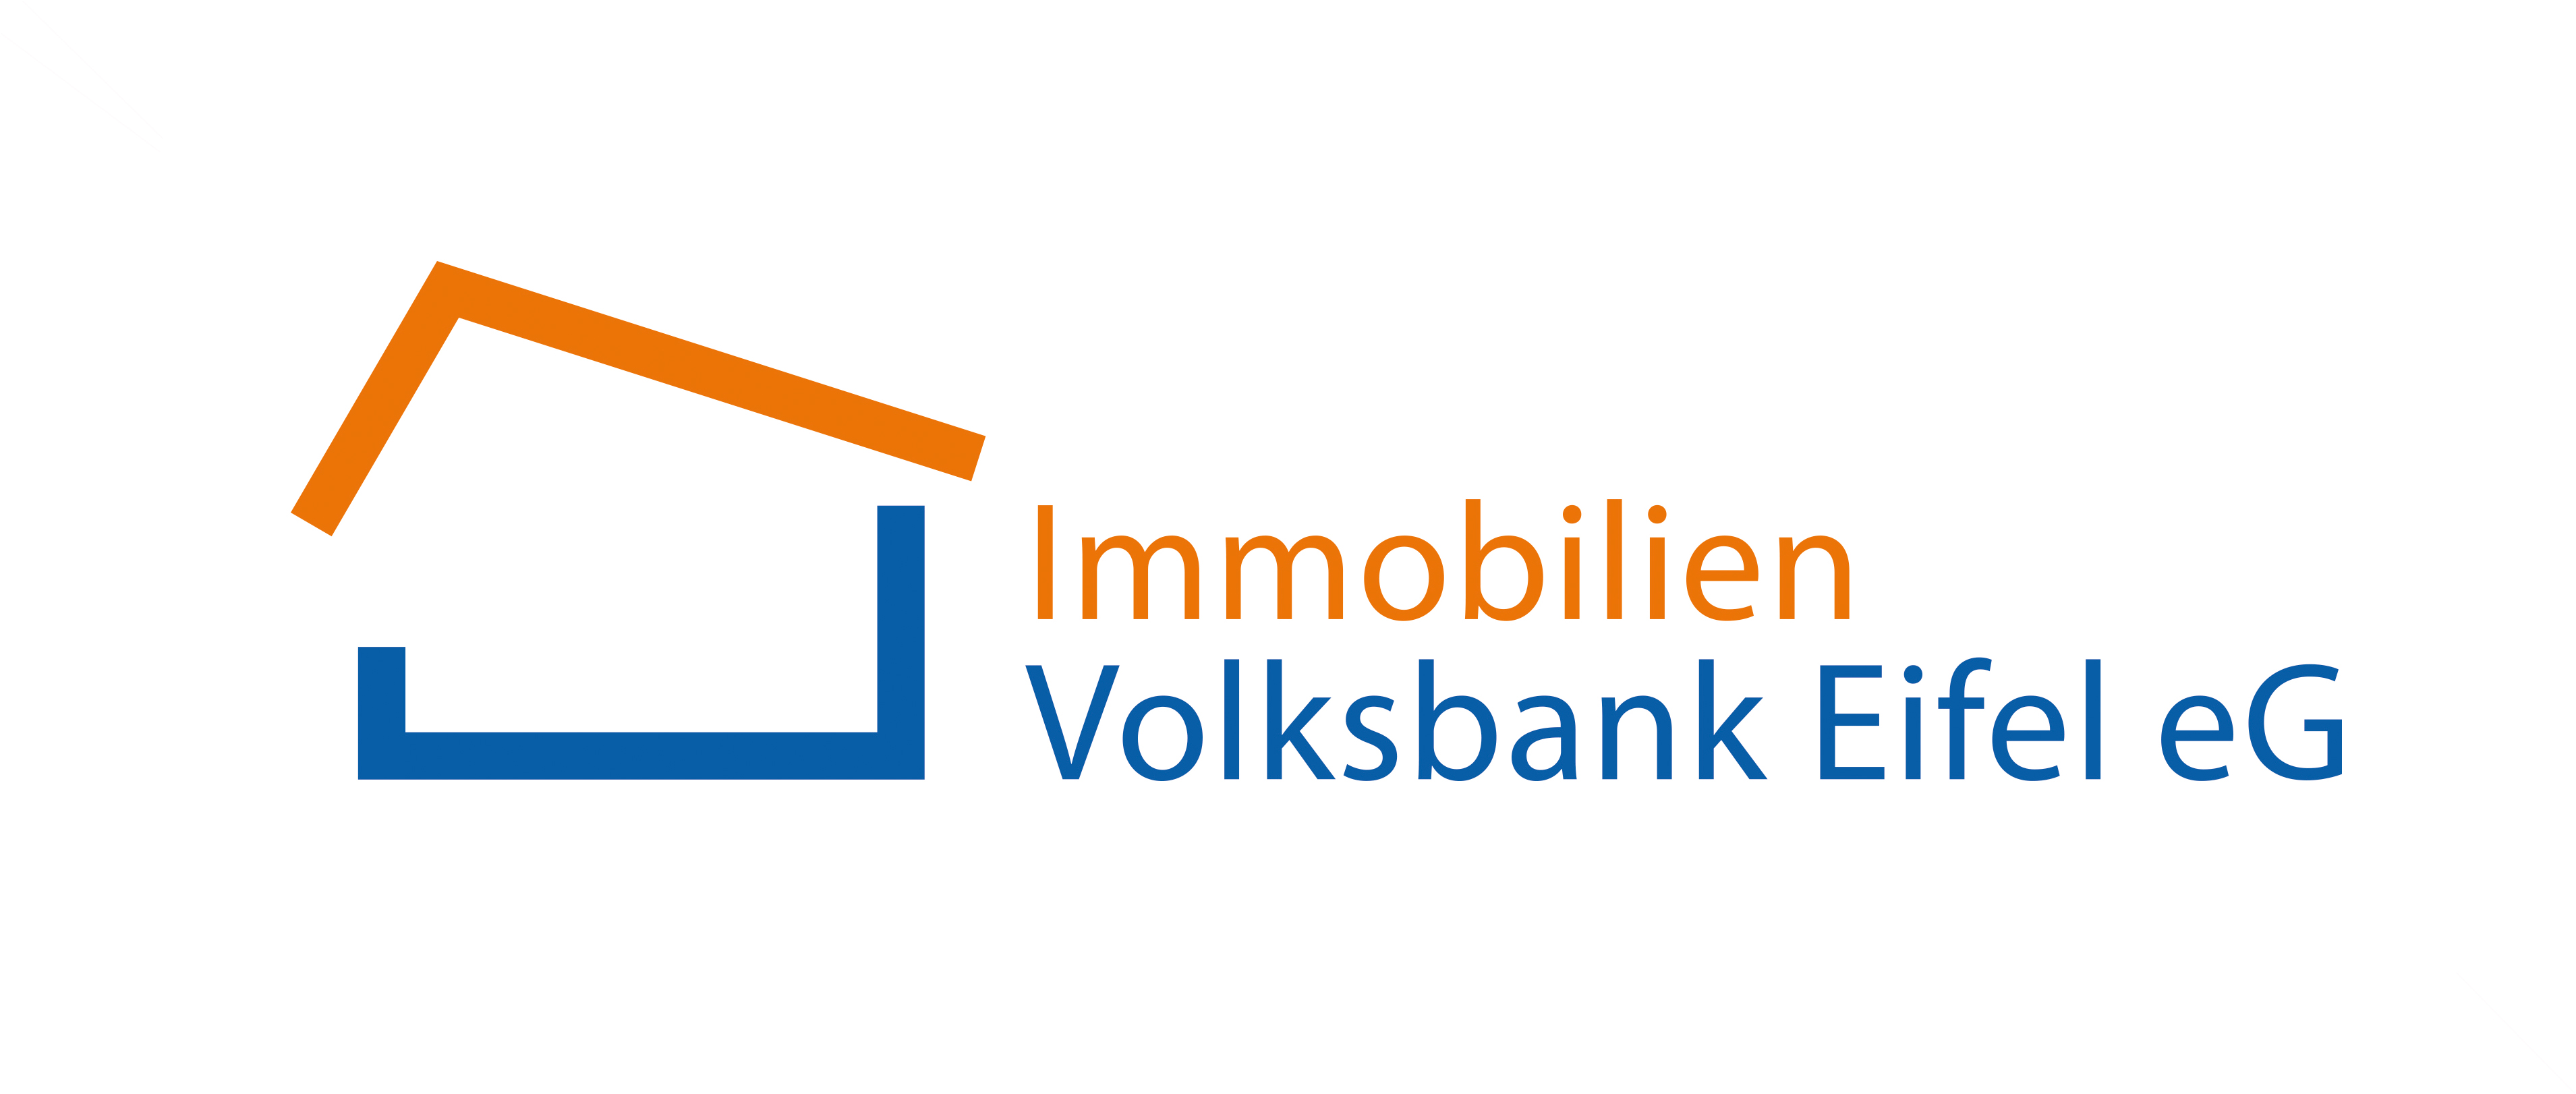 IMMOBILIEN Volksbank Eifel eG.